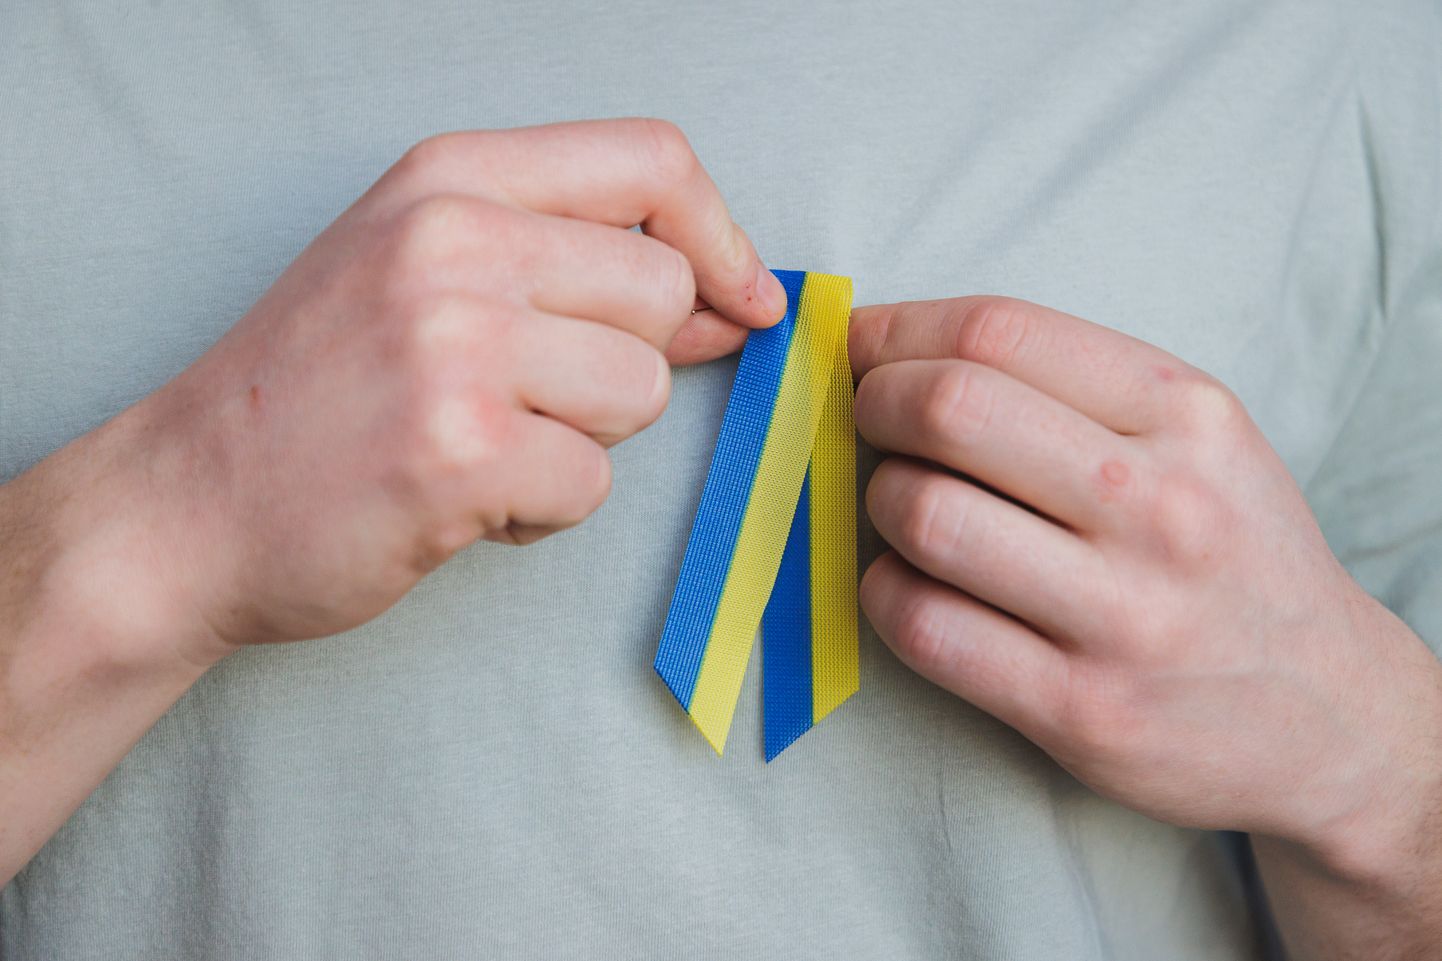 Лента цветов украинского флага.